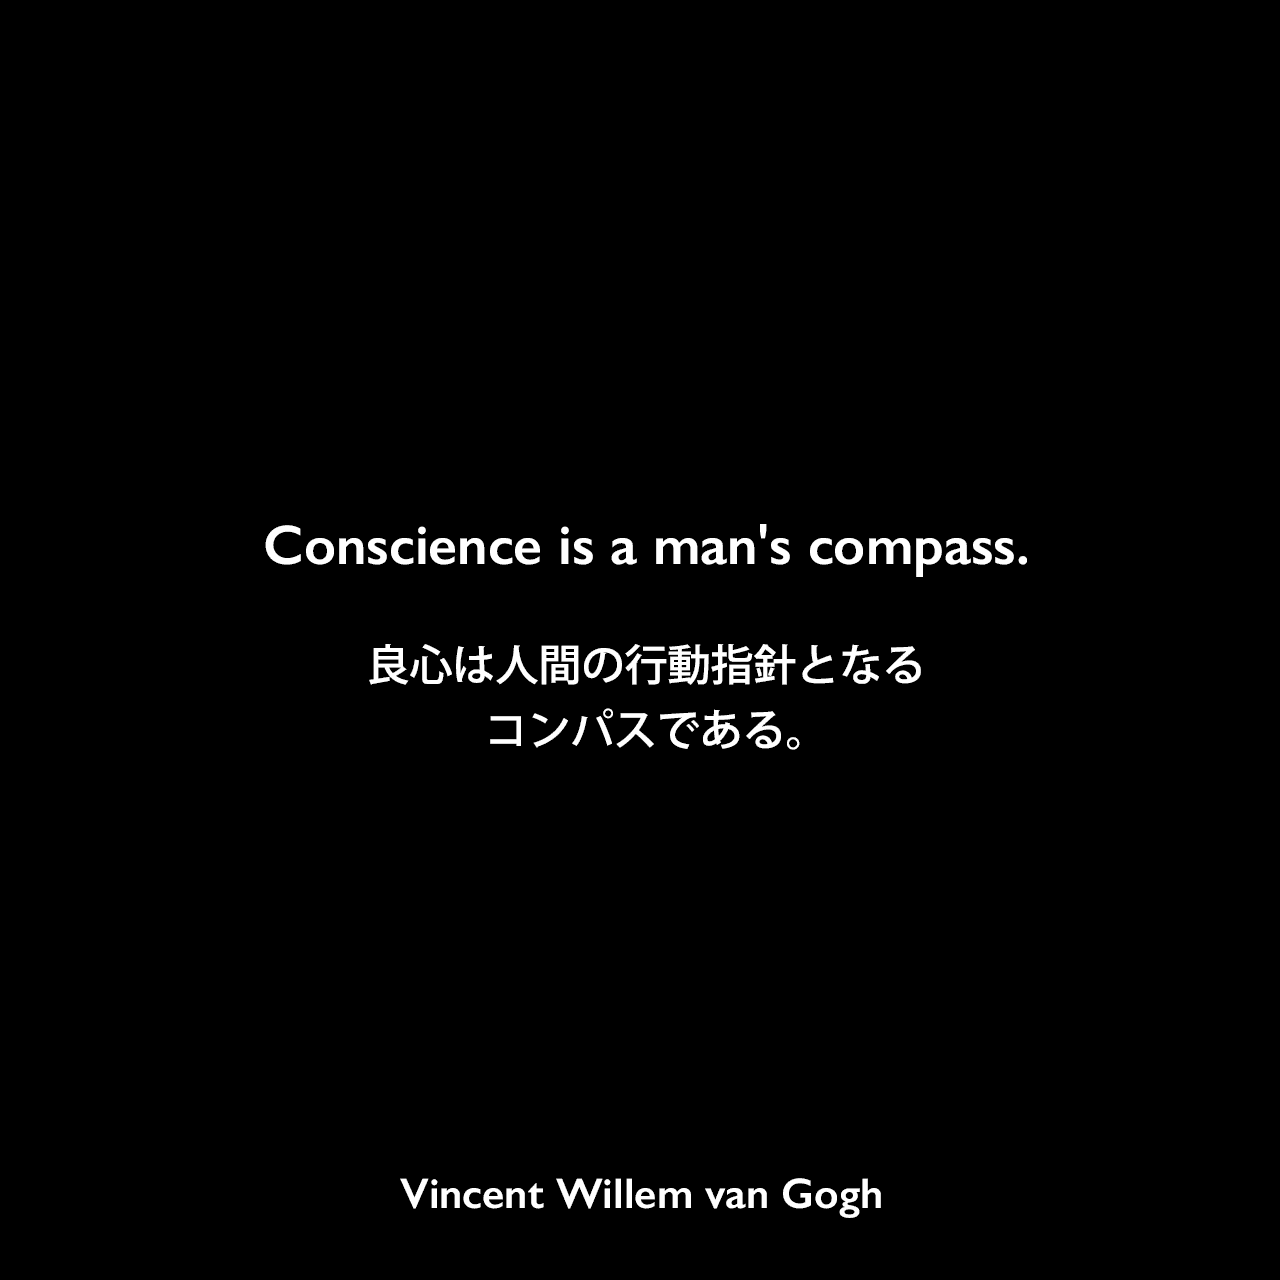 Conscience is a man's compass.良心は人間の行動指針となるコンパスである。- ゴッホの弟テオへ宛てた手紙よりVincent Willem van Gogh